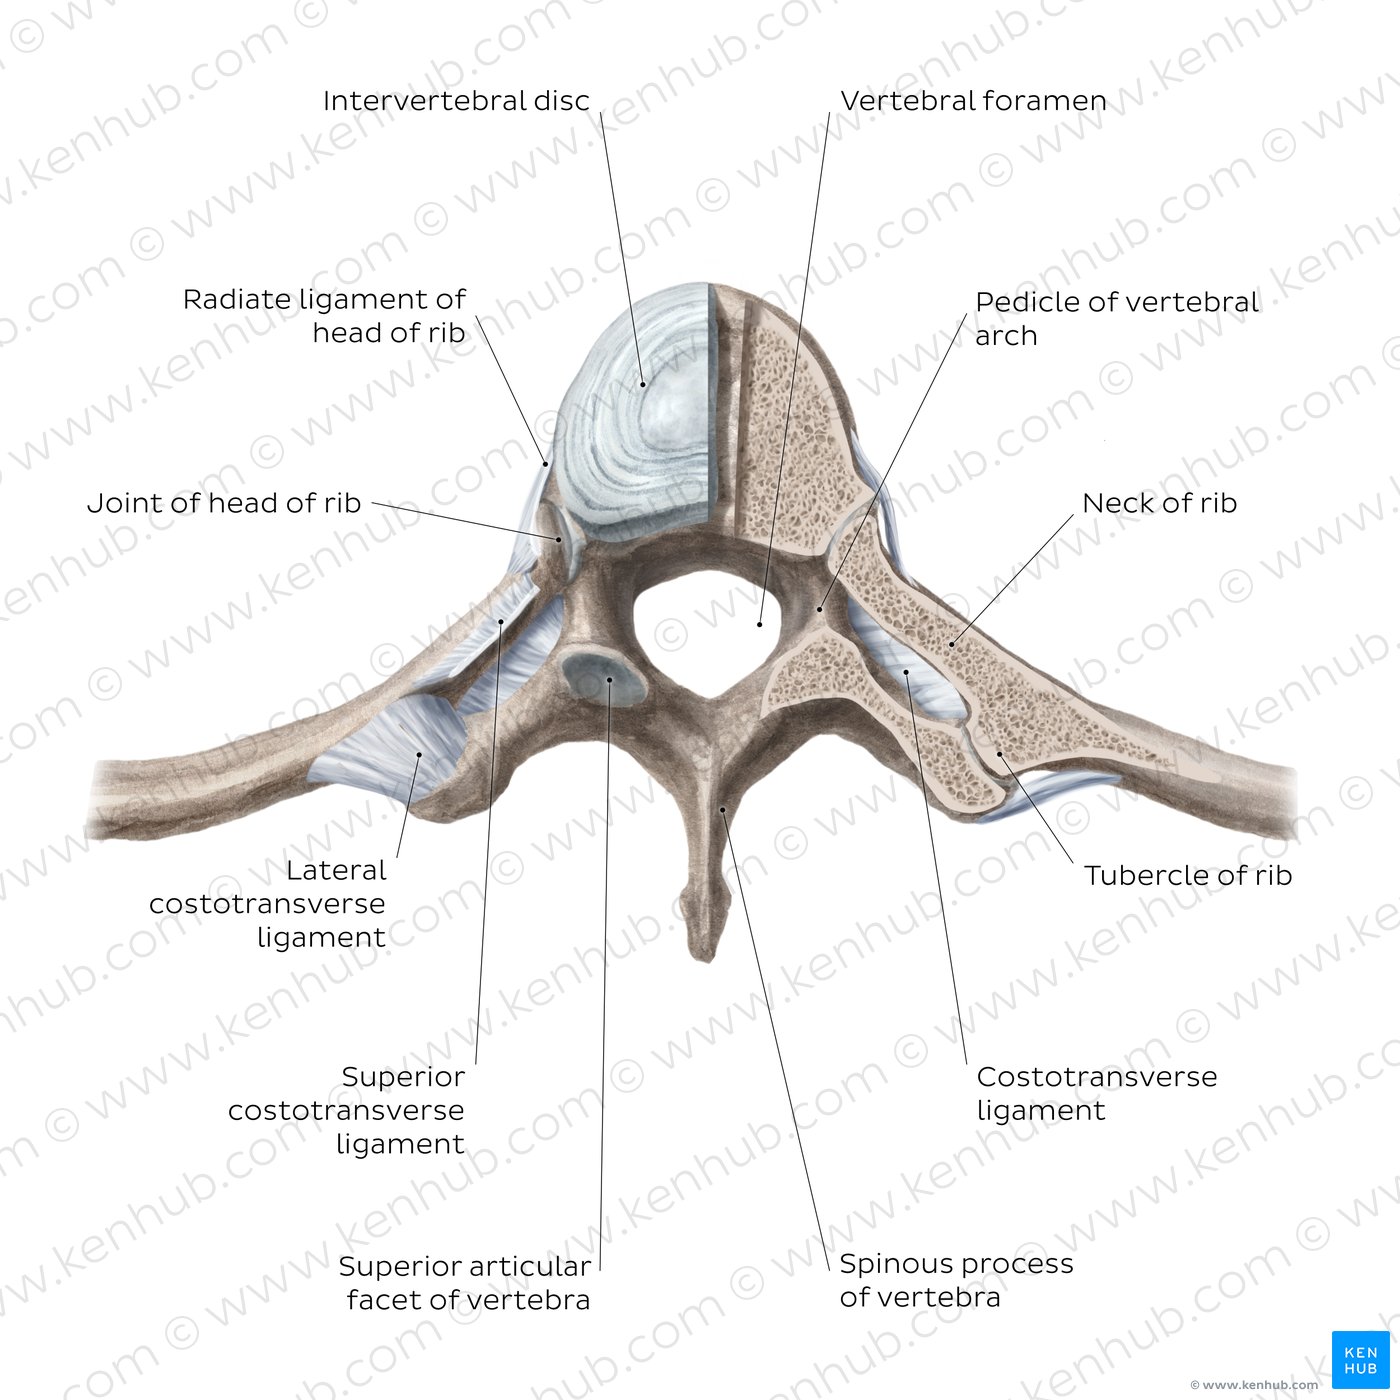 Costovertebral joints (transverse section)